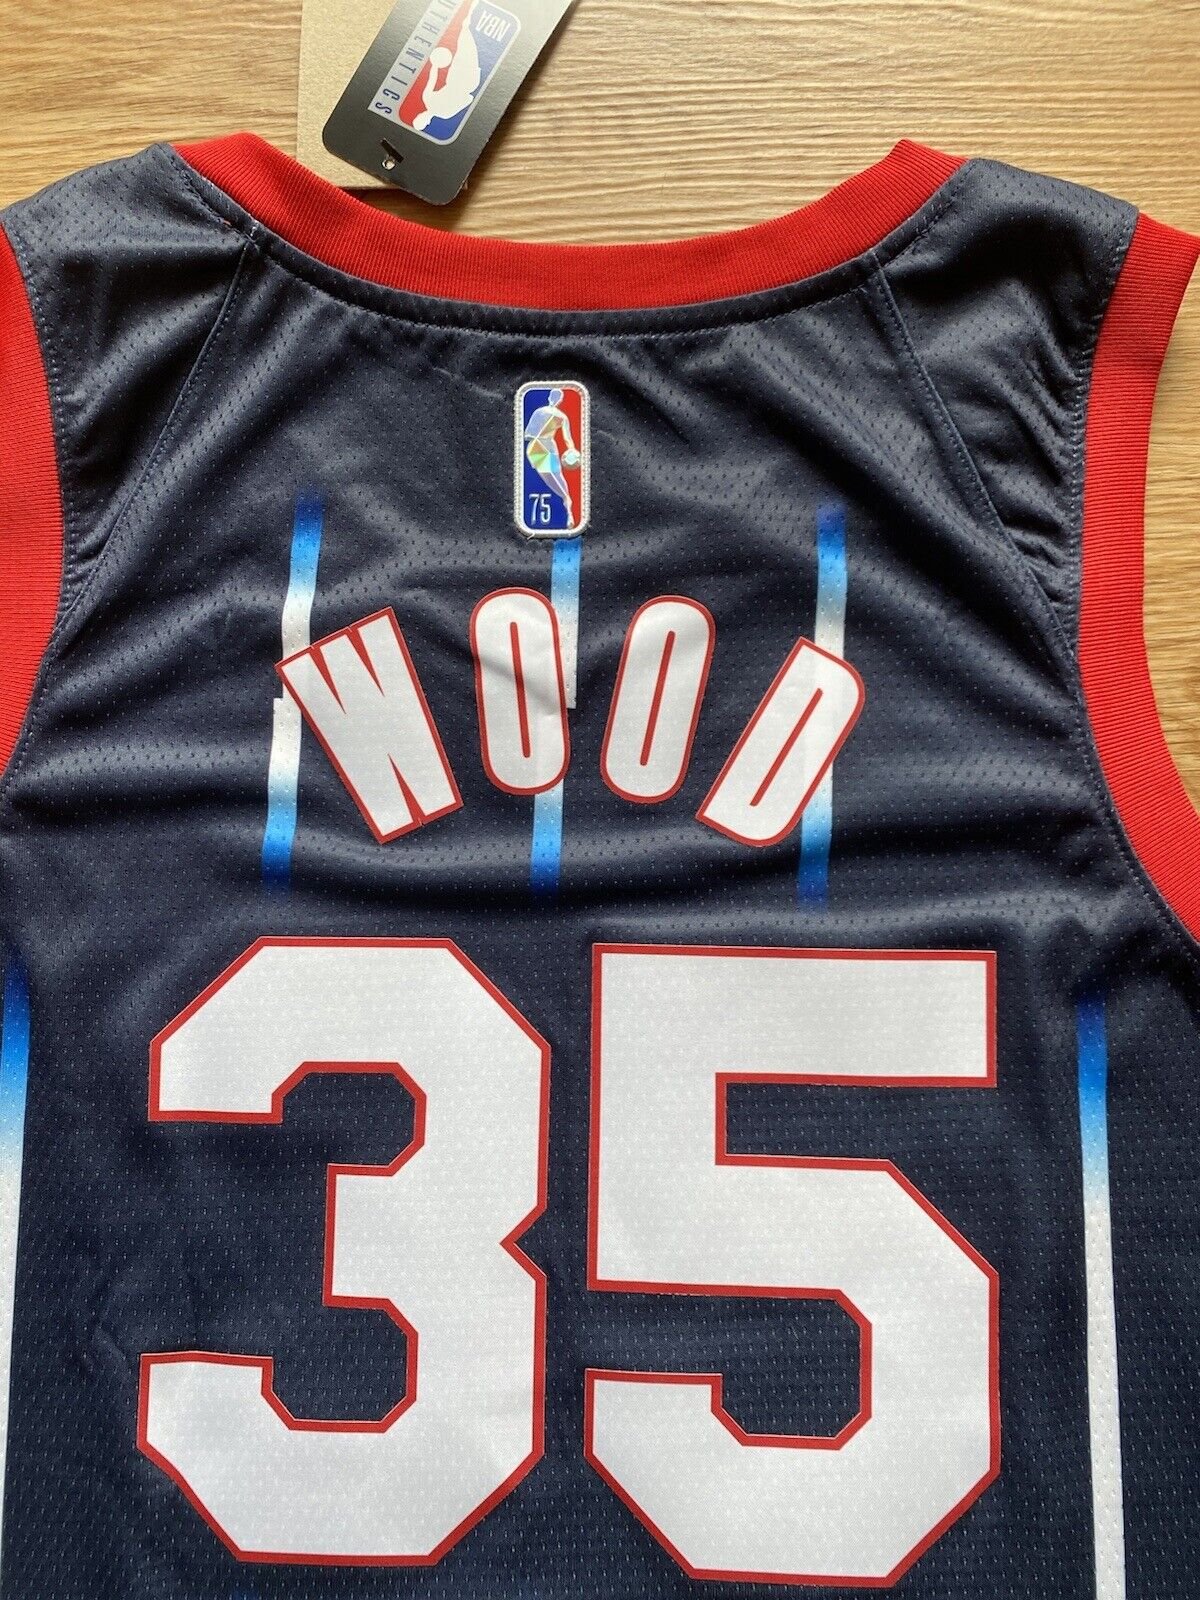 NWT Nike Nikola Jokic #15 Denver Nuggets 2023 All Star NBA Jersey